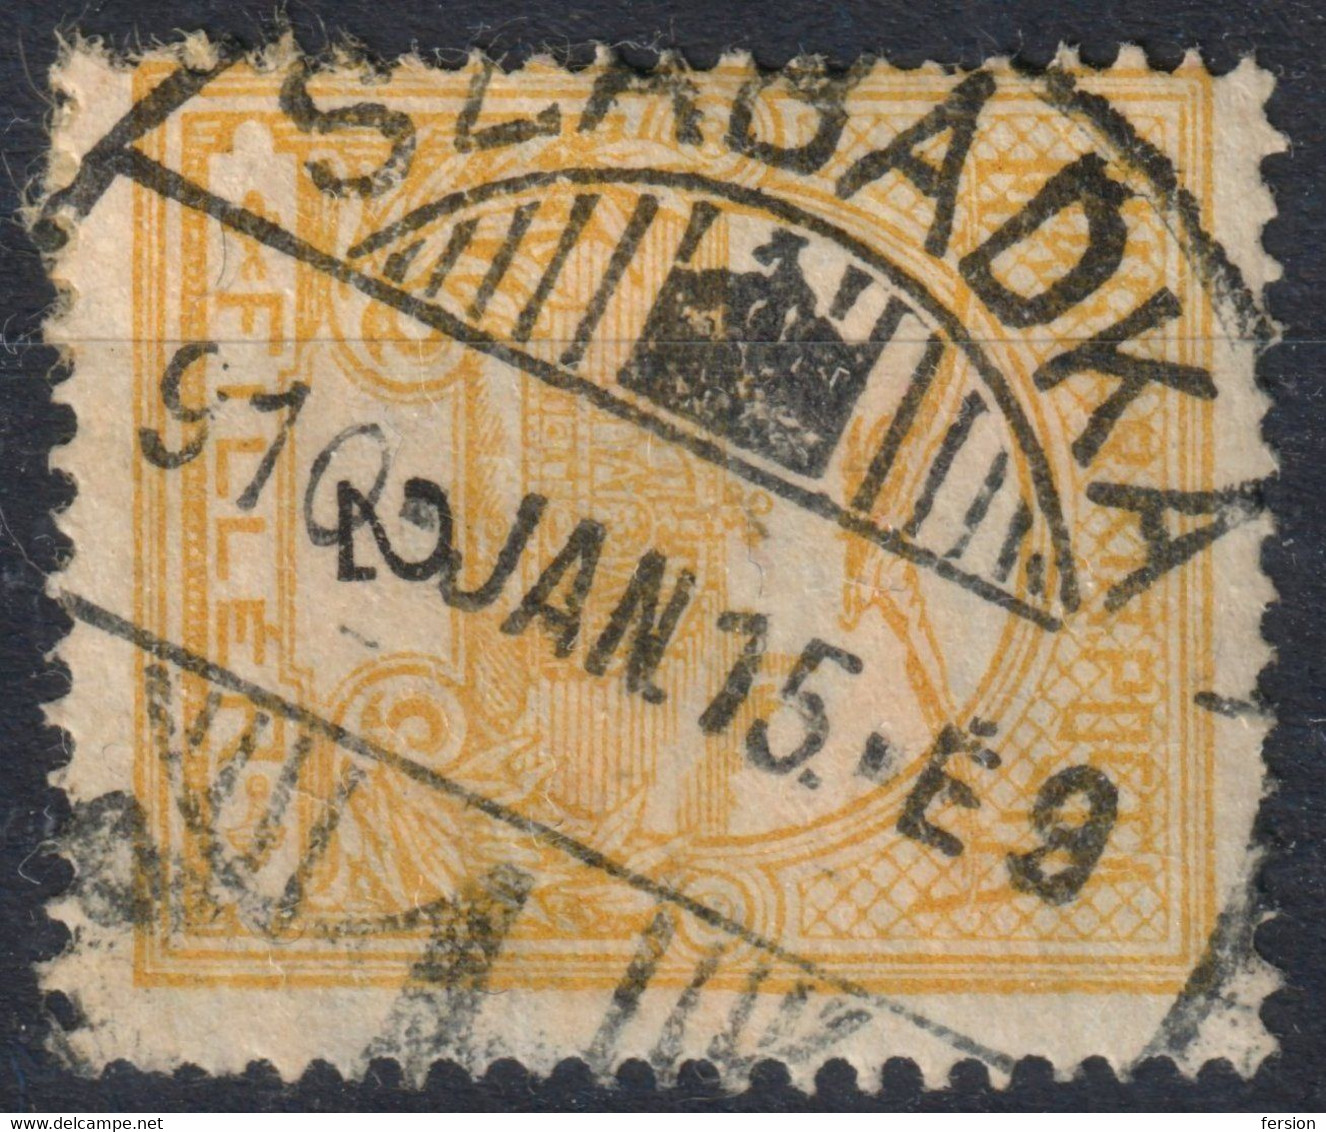 SZABADKA SUBOTICA Postmark TURUL Crown 1910 Hungary SERBIA Vojvodina SHS BACKA BÁCS BODROG County KuK 2 Fill - Voorfilatelie